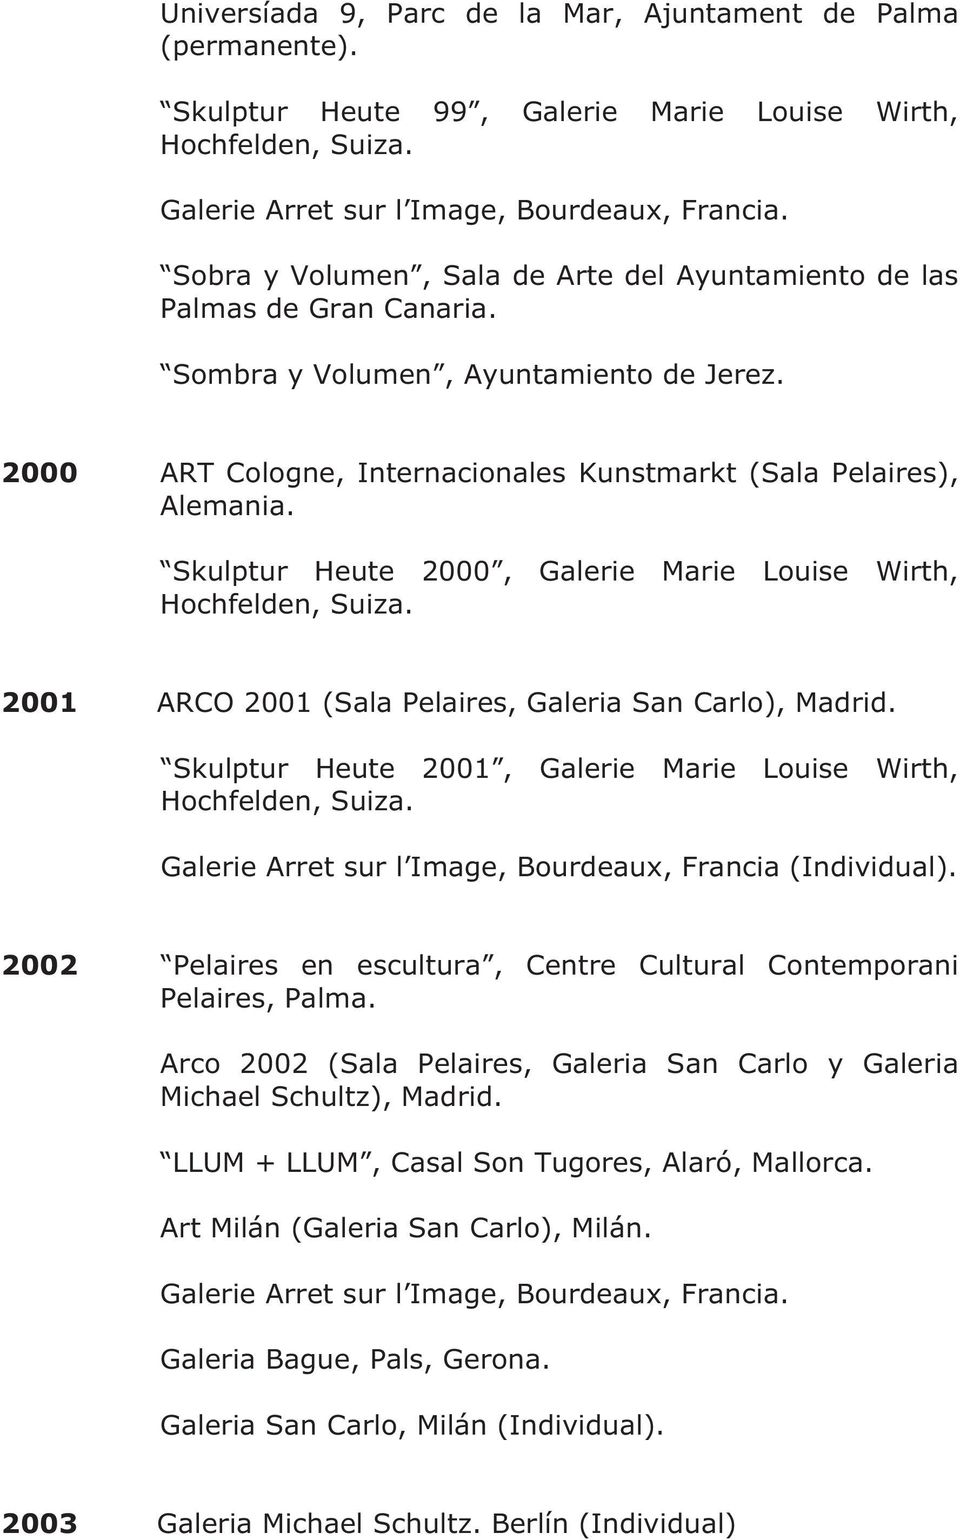 Skulptur Heute 2000, Galerie Marie Louise Wirth, Hochfelden, Suiza. 2001 ARCO 2001 (Sala Pelaires, Galeria San Carlo), Madrid. Skulptur Heute 2001, Galerie Marie Louise Wirth, Hochfelden, Suiza.